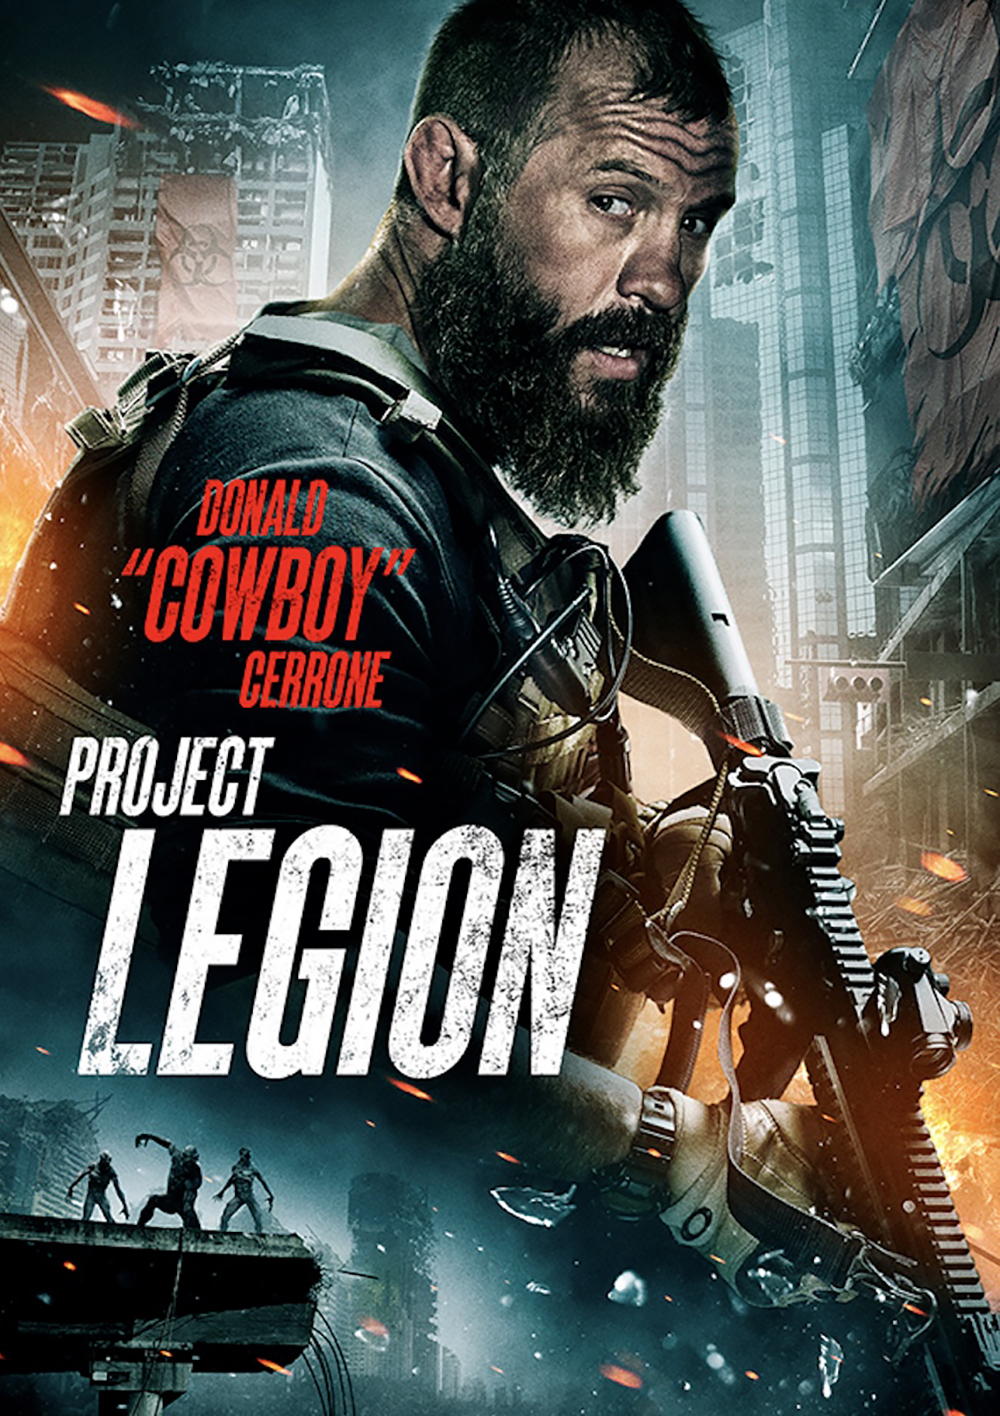 Project Legion starring Donald "Cowboy" Cerrone